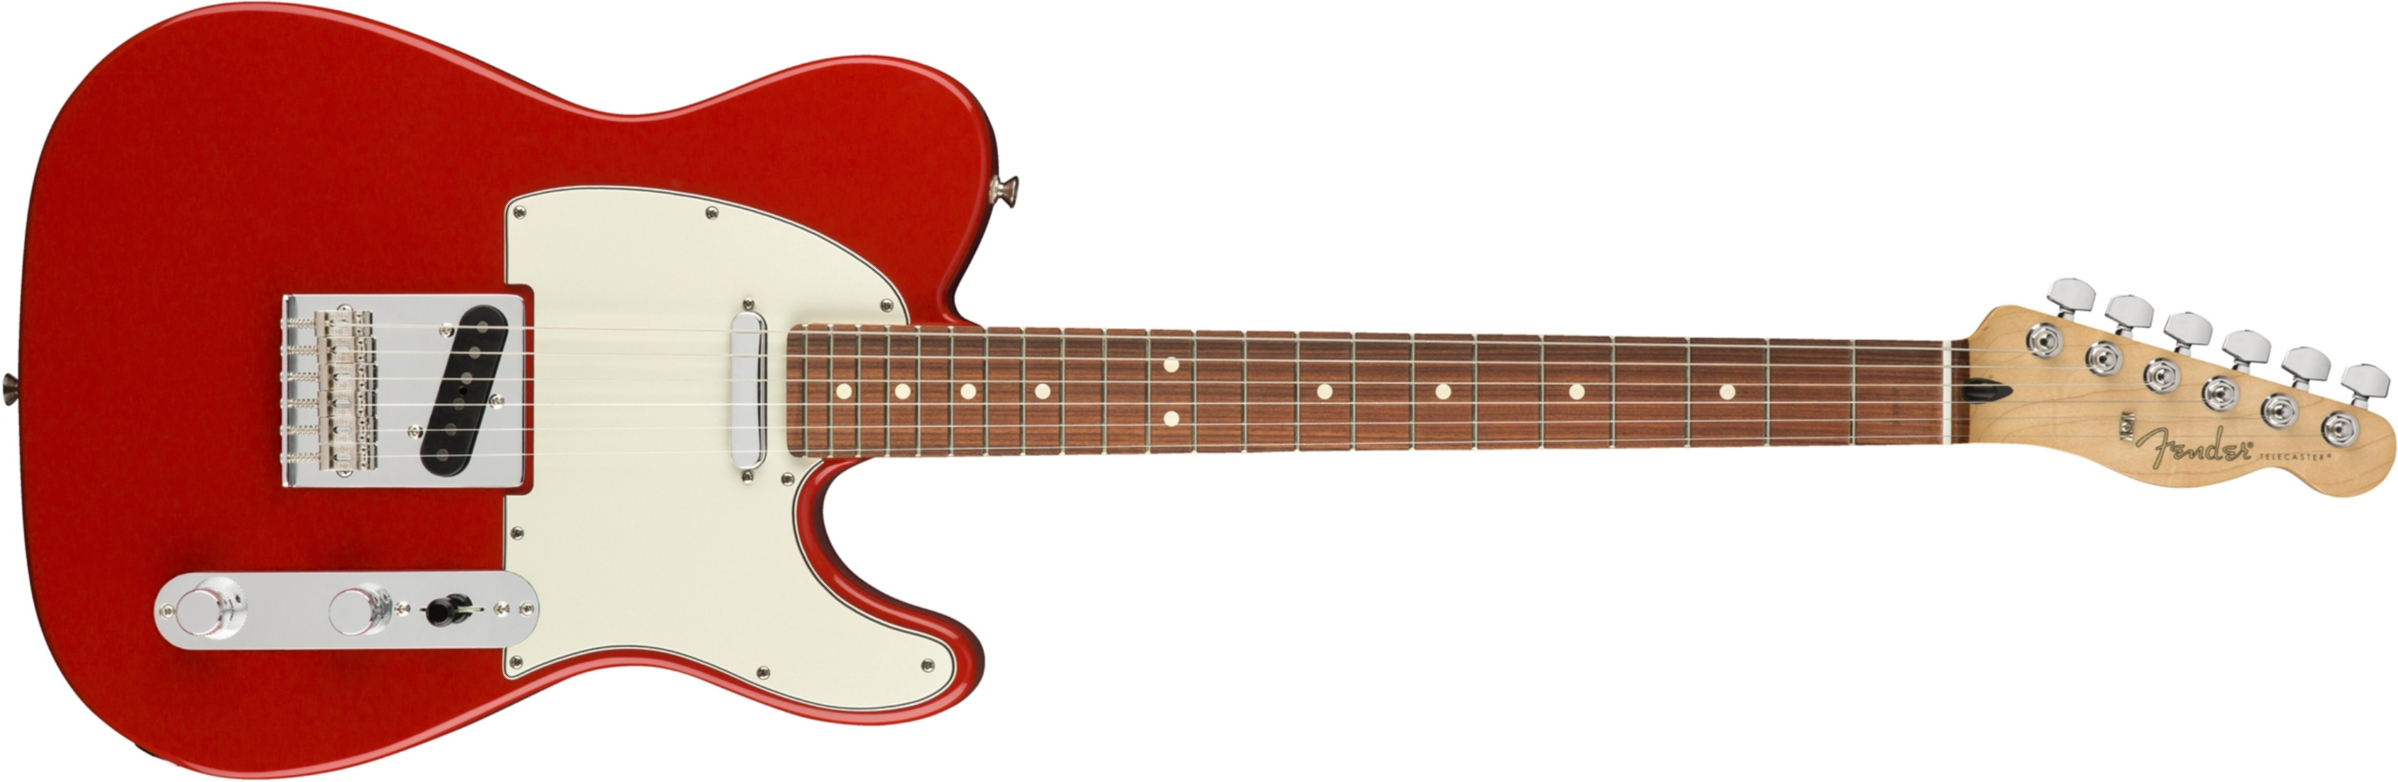 Fender Tele Player Mex Ss Pf - Sonic Red - Televorm elektrische gitaar - Main picture